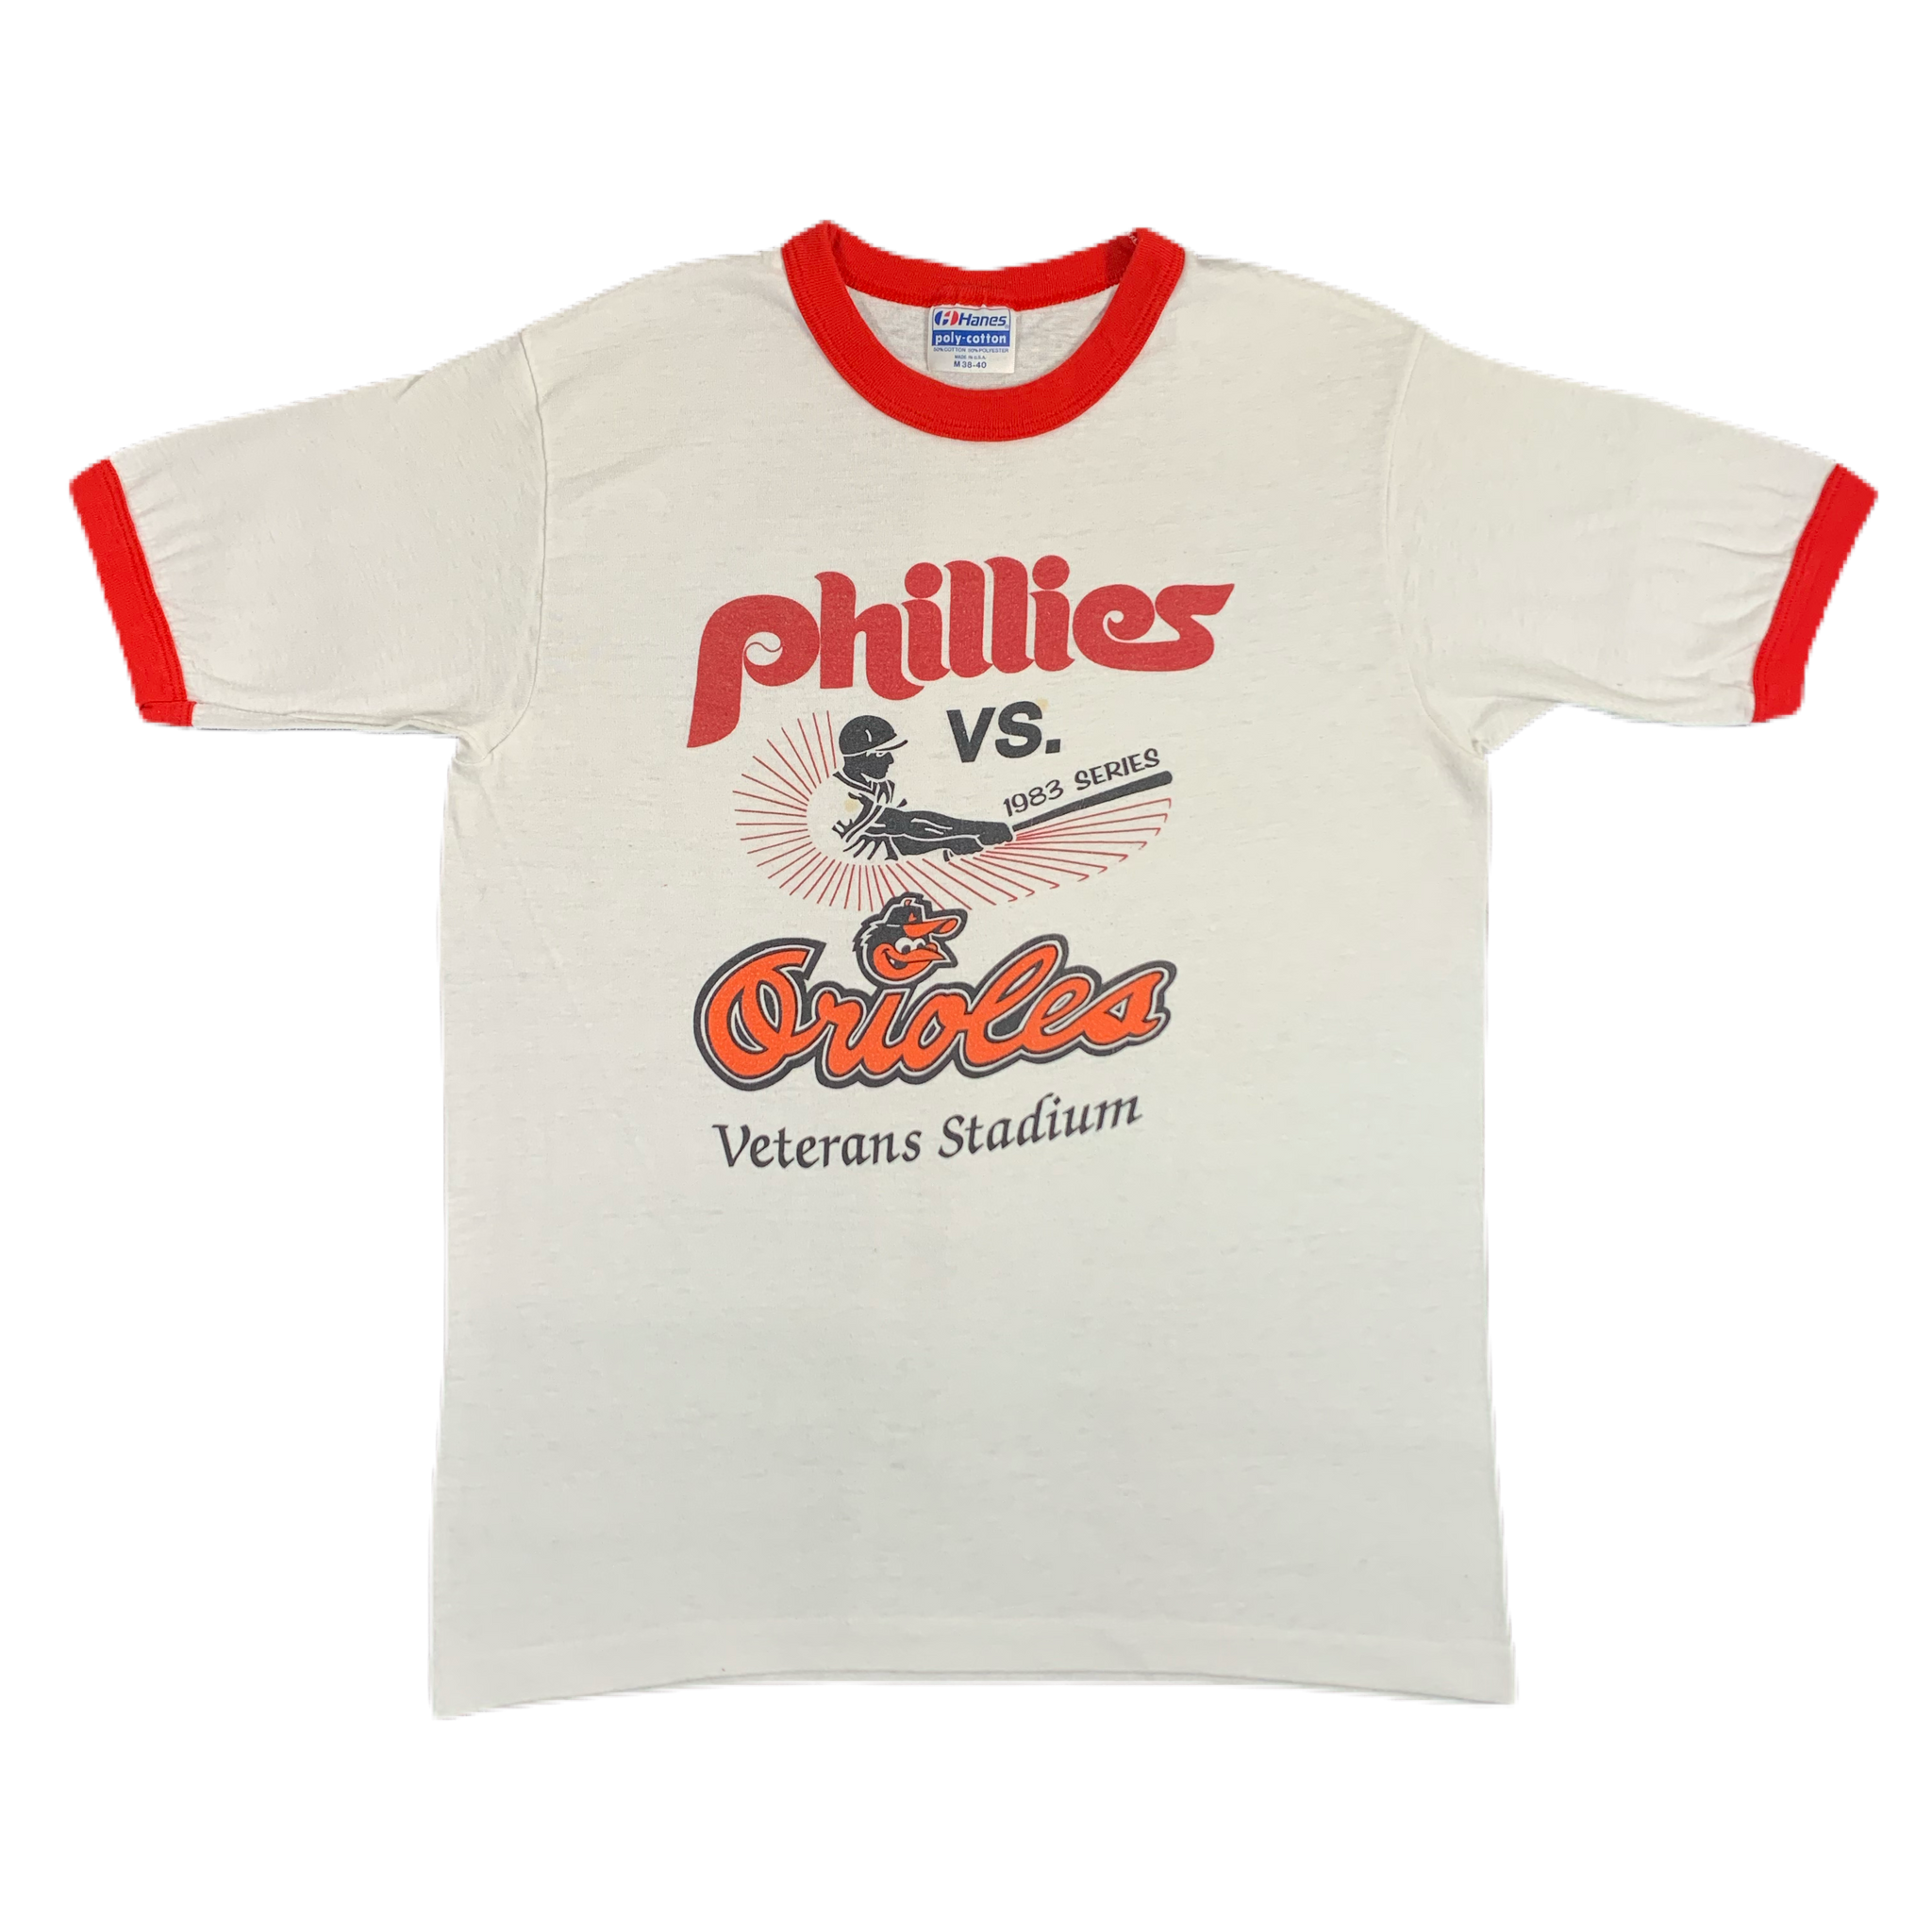 Vintage Phillies Vs. Orioles “1983 Series” Ringer Shirt